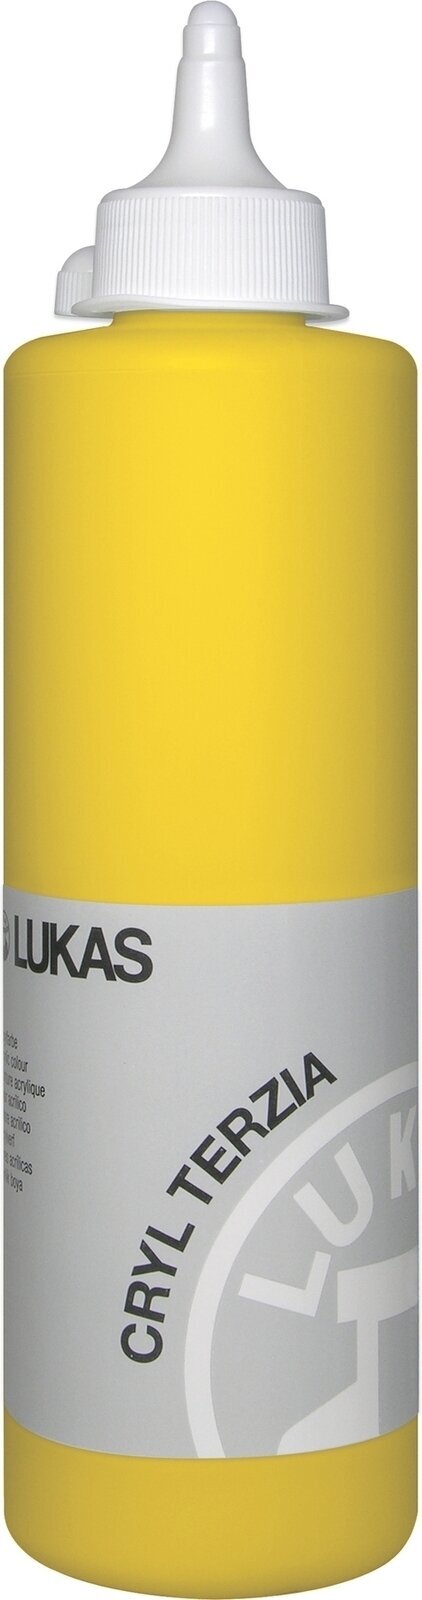 Acrylfarbe Lukas Cryl Terzia Acrylic Paint Plastic Bottle Acrylfarbe Cadmium Yellow Light Hue 500 ml 1 Stck